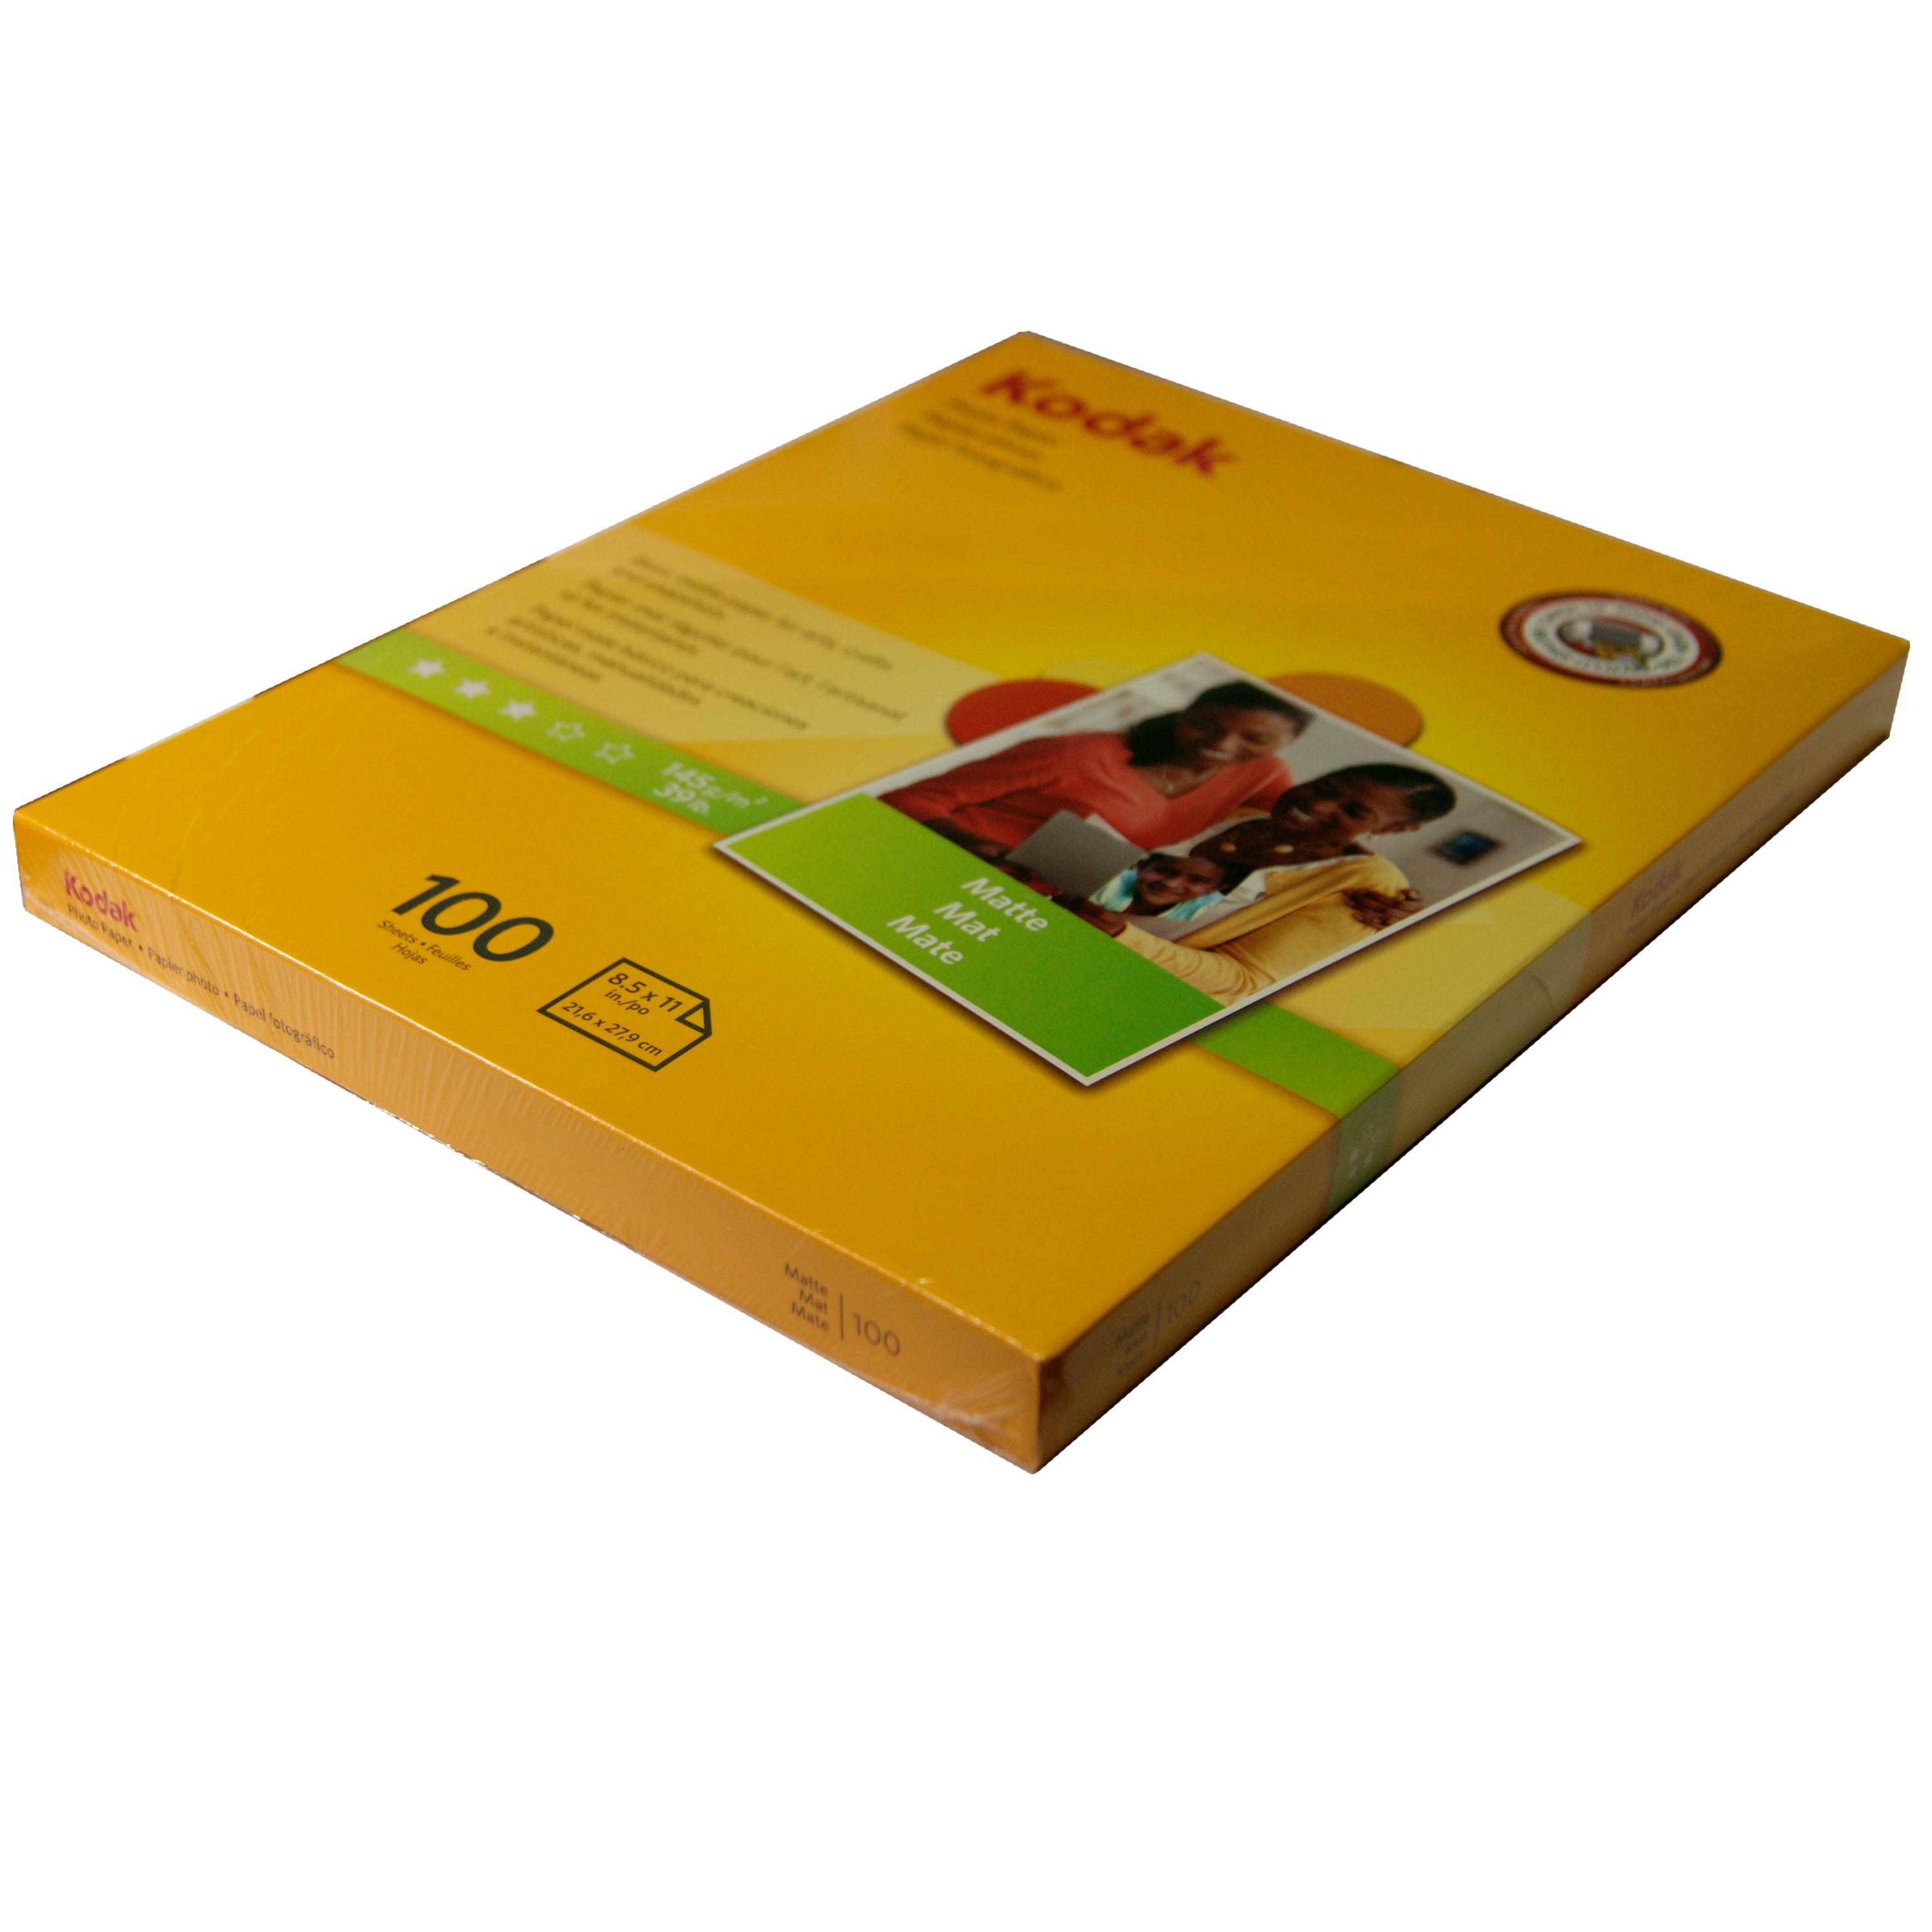 Kodak 8 5” X 11” Photo Paper – Matte 100 Sheets Pack